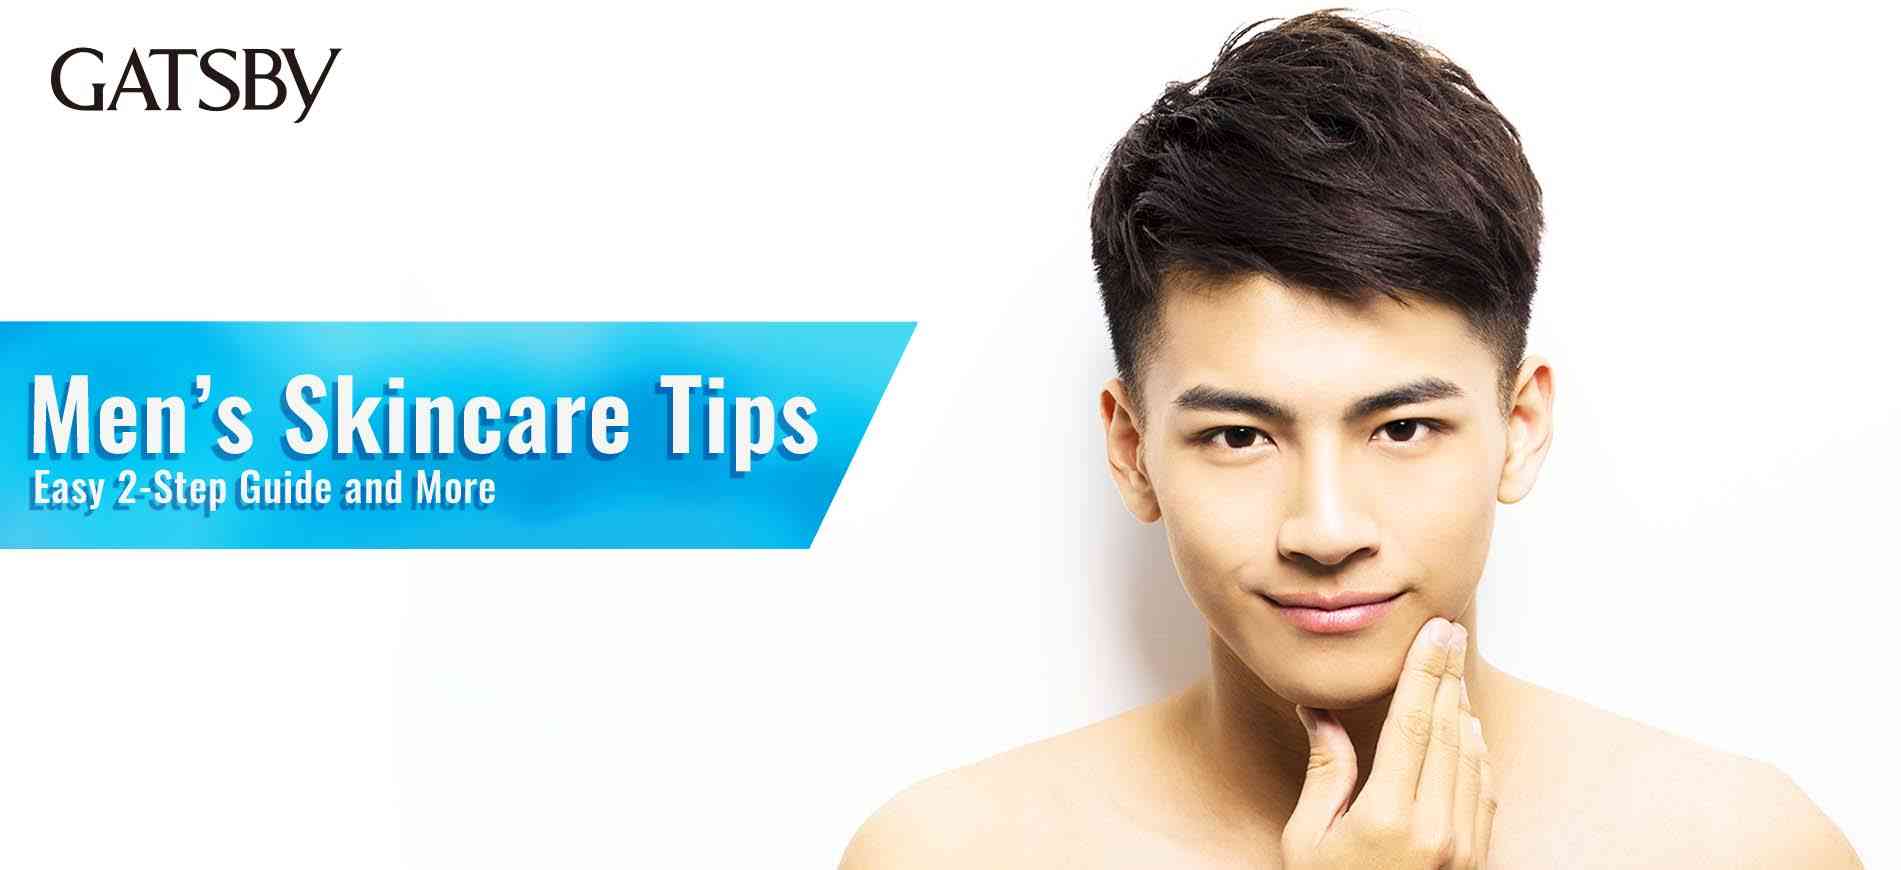 Easy Men’s Skincare Tips by GATSBY 